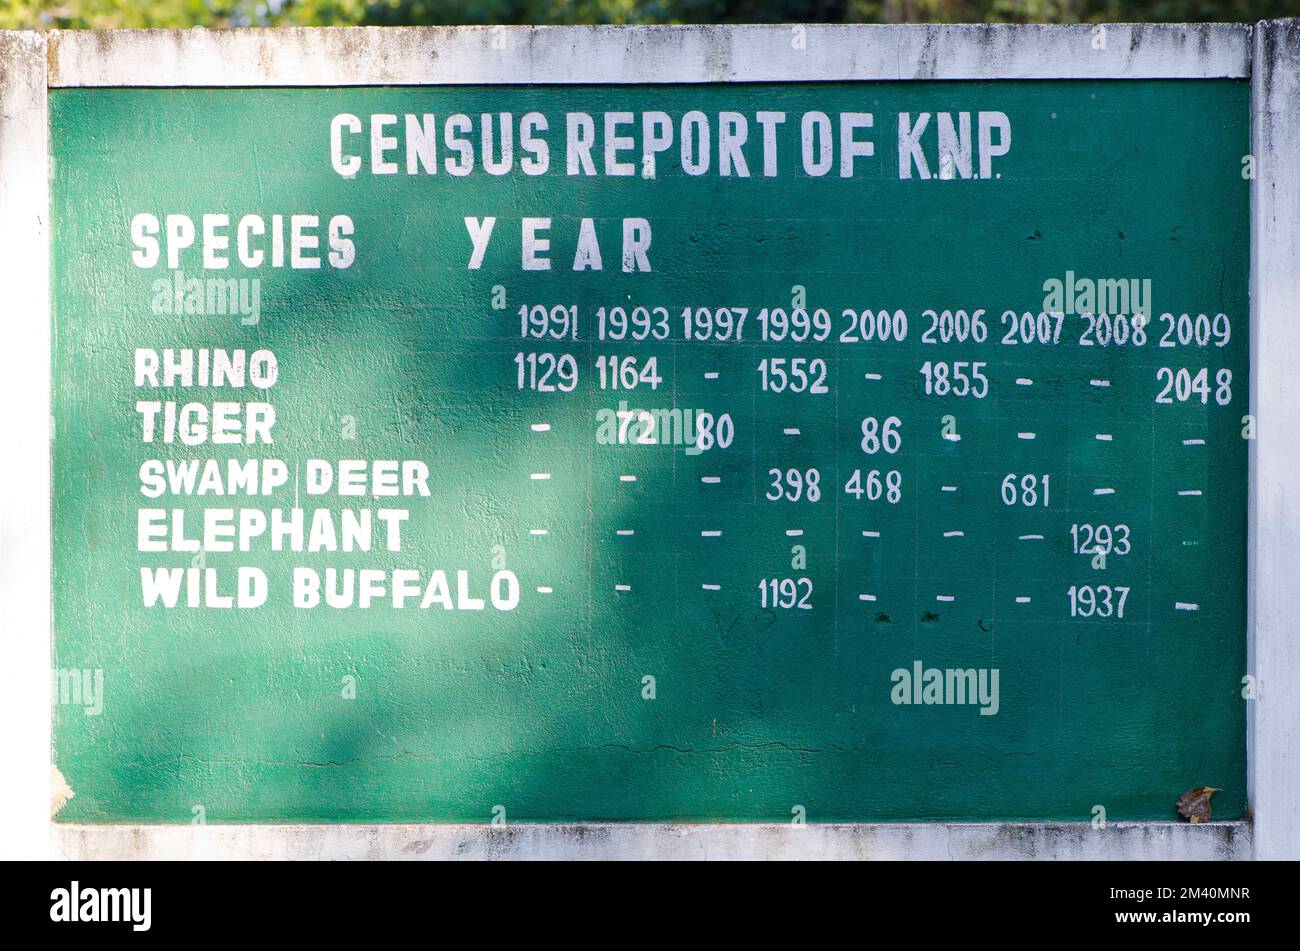 Animals in kaziranga national park hi-res stock photography and images -  Alamy